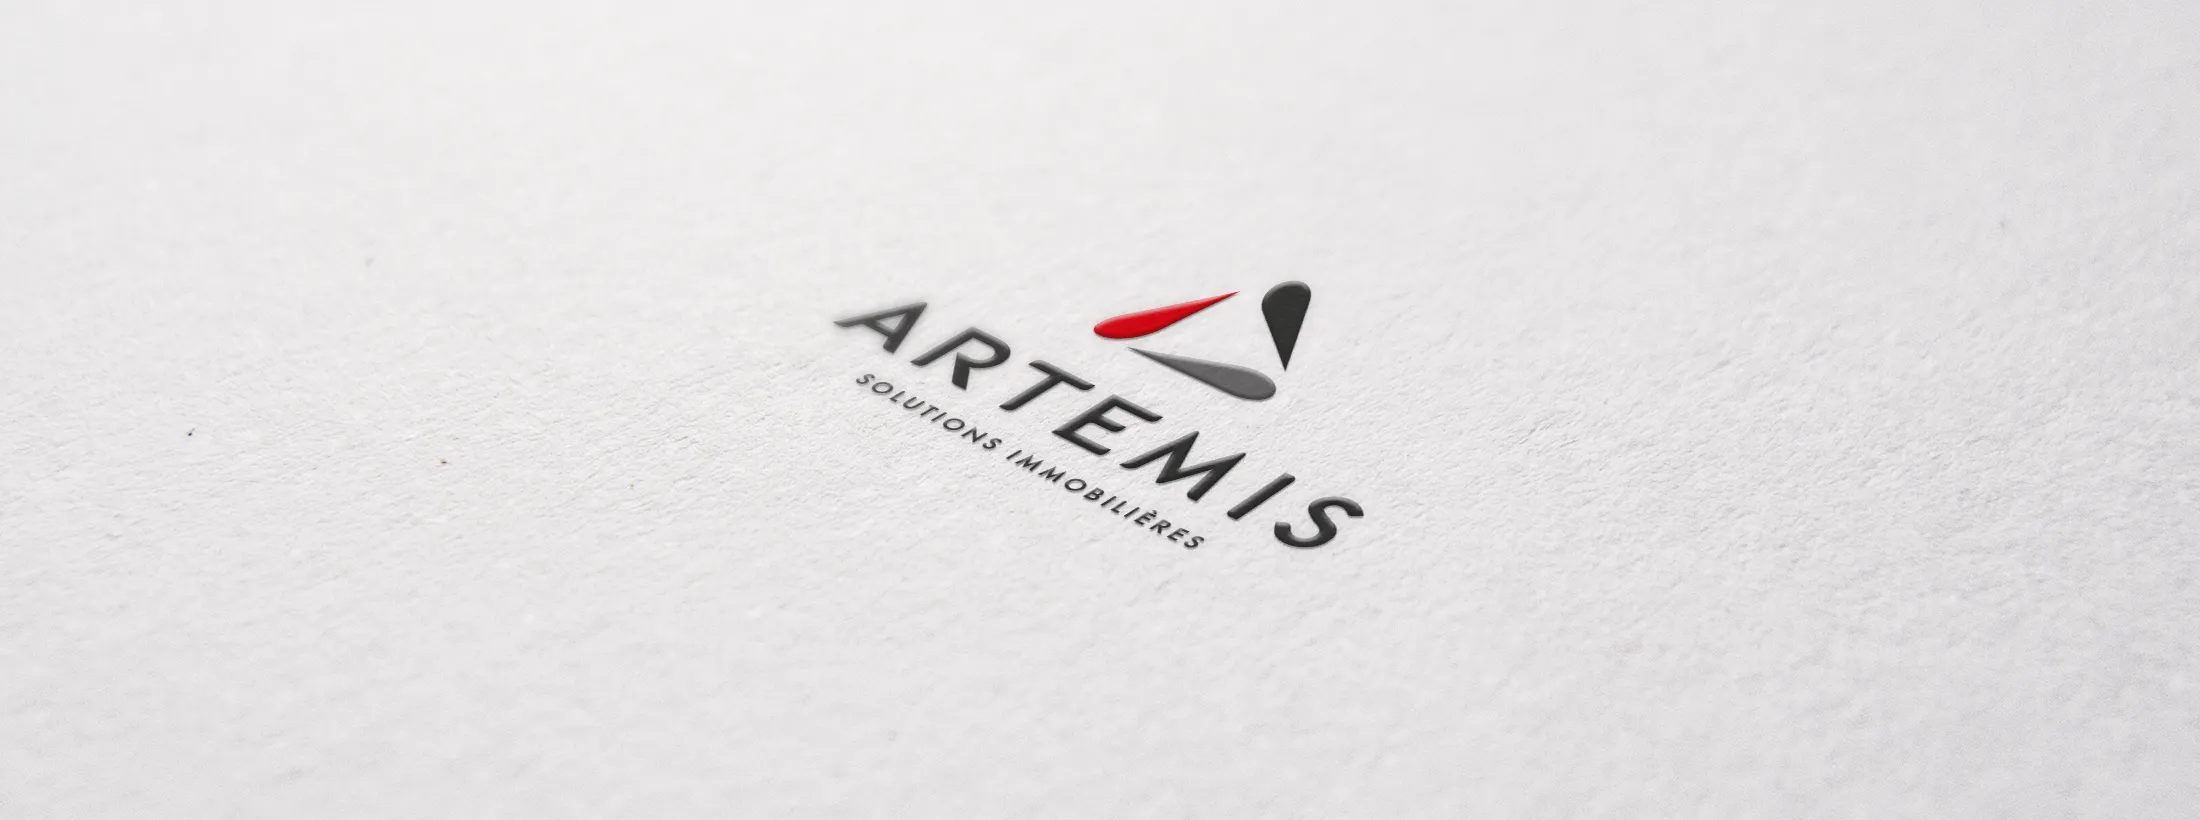 logo artemis branding phone identite visuelle osb communication